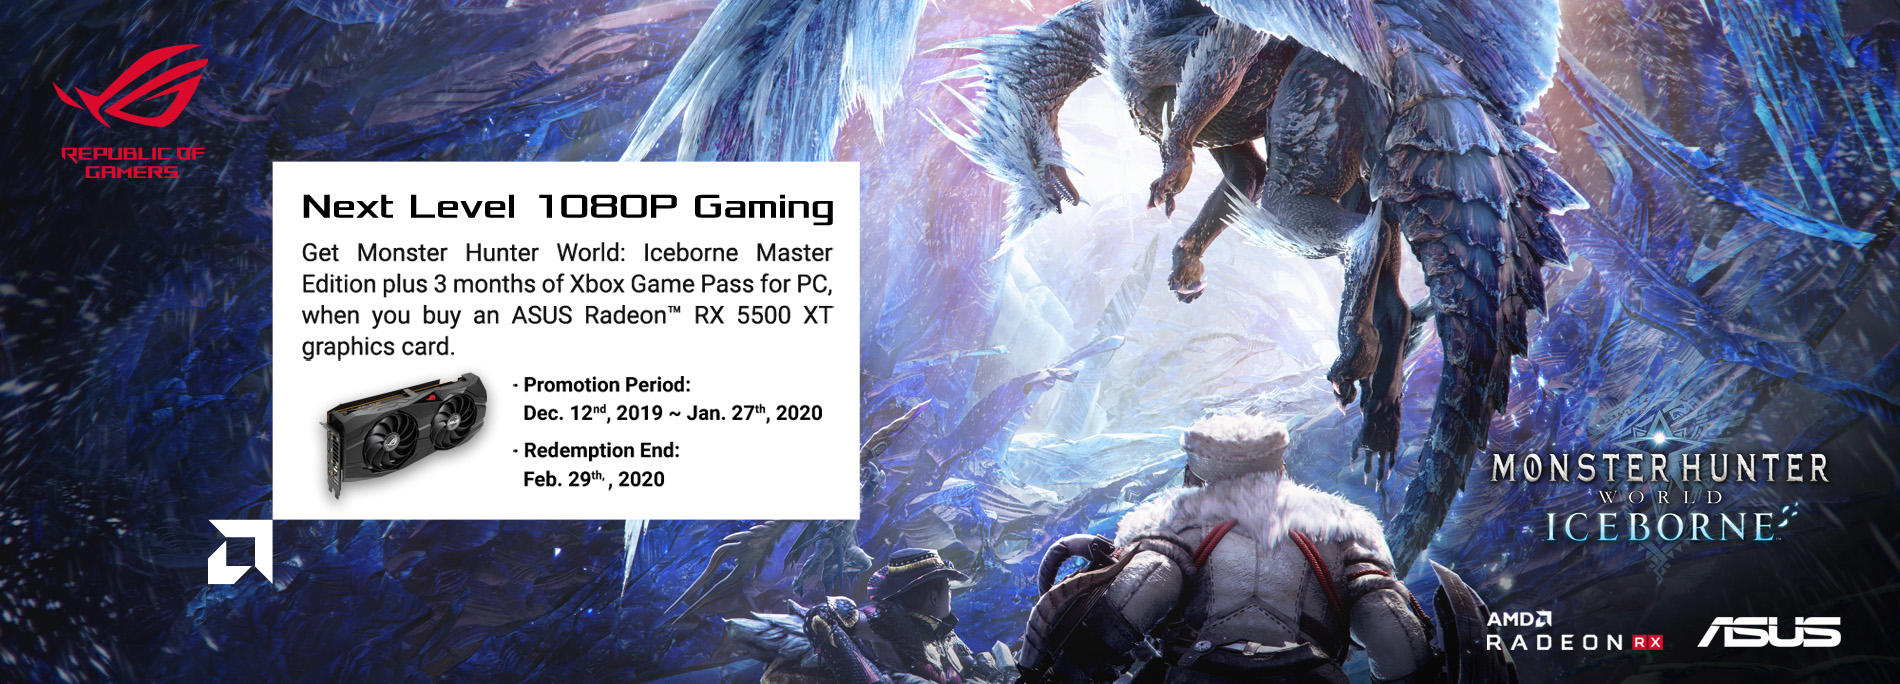 【AMD Radeon RX 5500 XT】送你熱門遊戲《Monster Hunter World: Iceborne™ Master Edition》